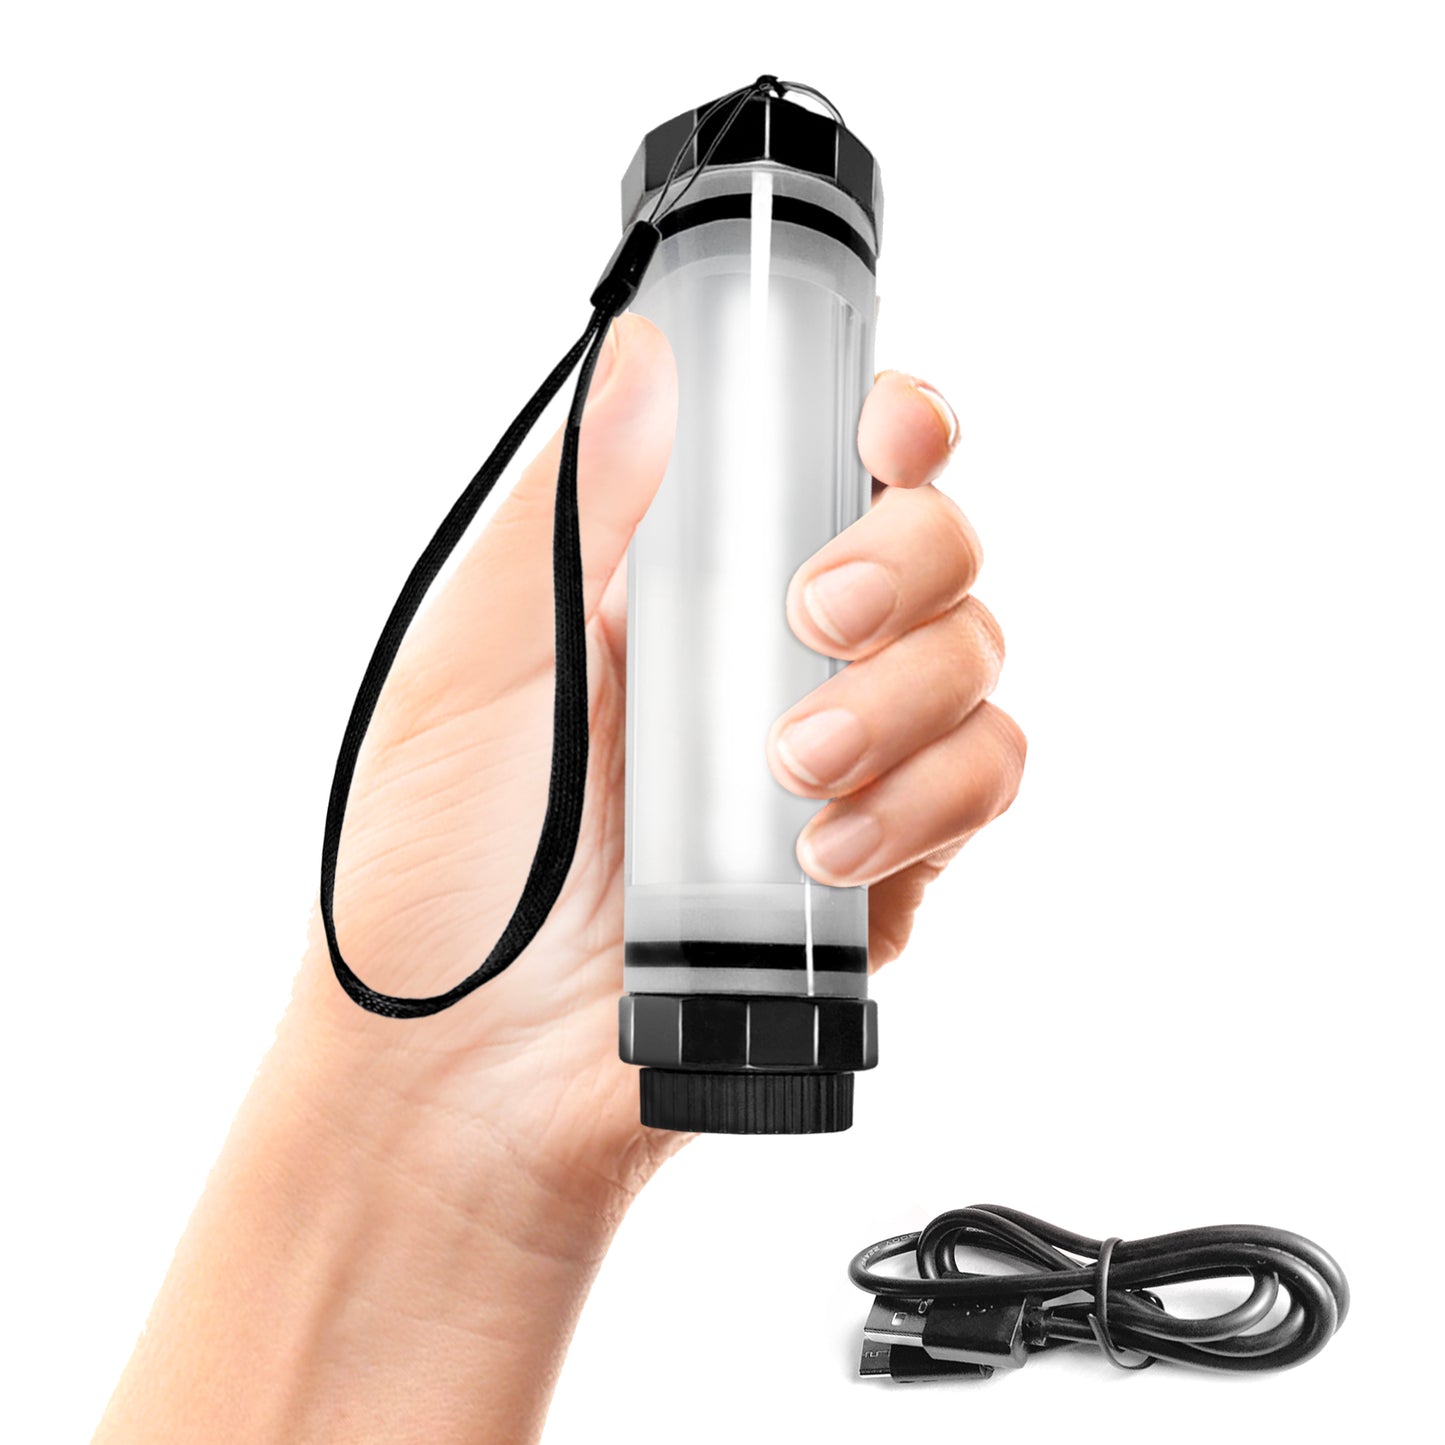 SunJack Waterproof LightStick Mini Camplight with Power Bank